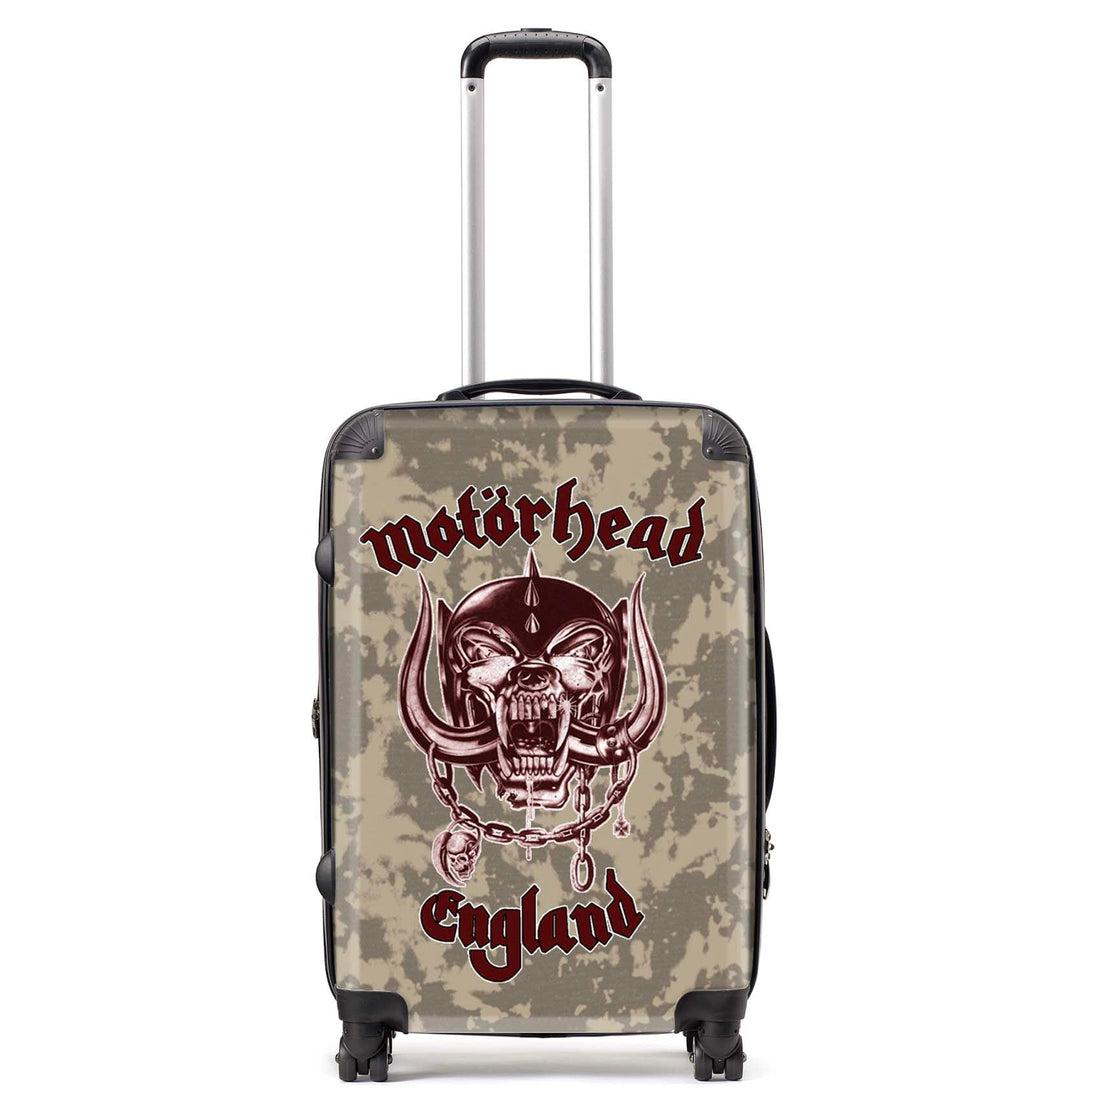 Rocksax Motorhead  Travel Bag Luggage - England White